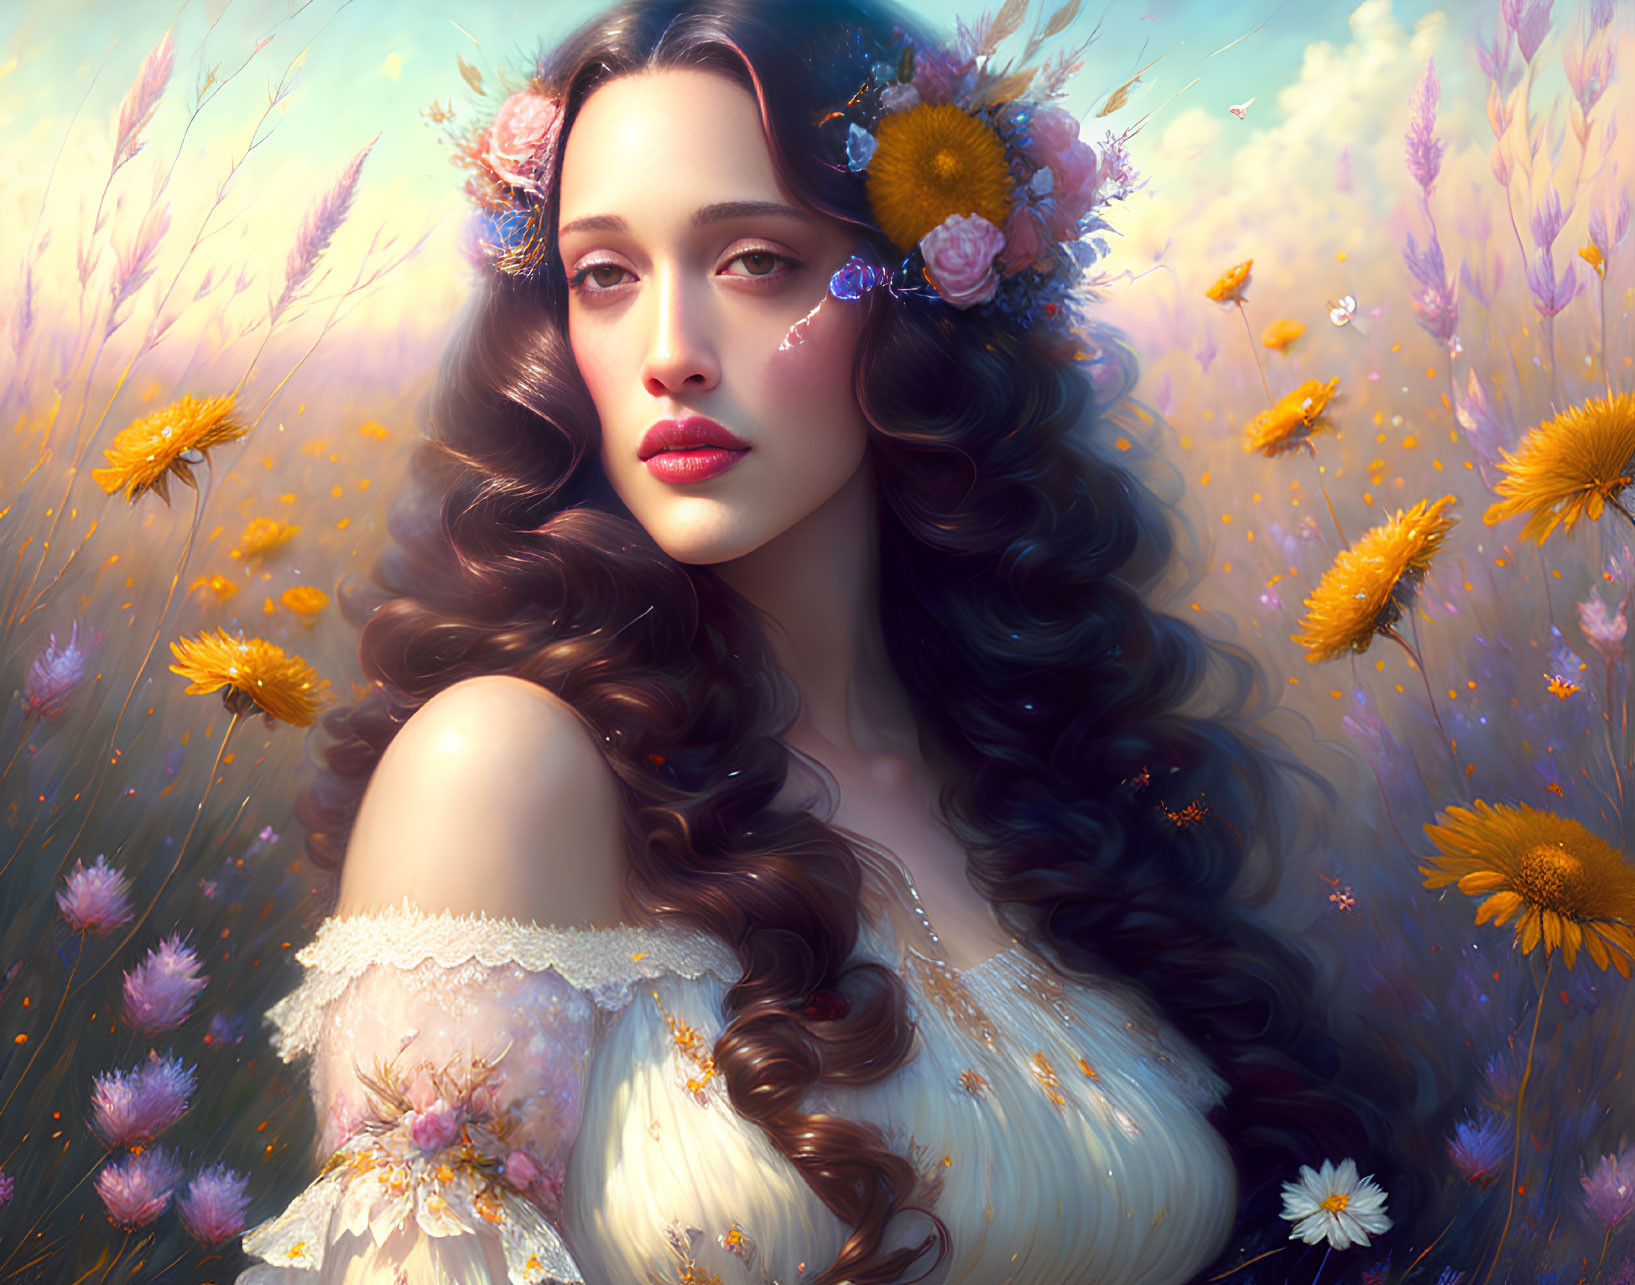 Digital artwork: Woman with long wavy hair in flower-adorned field